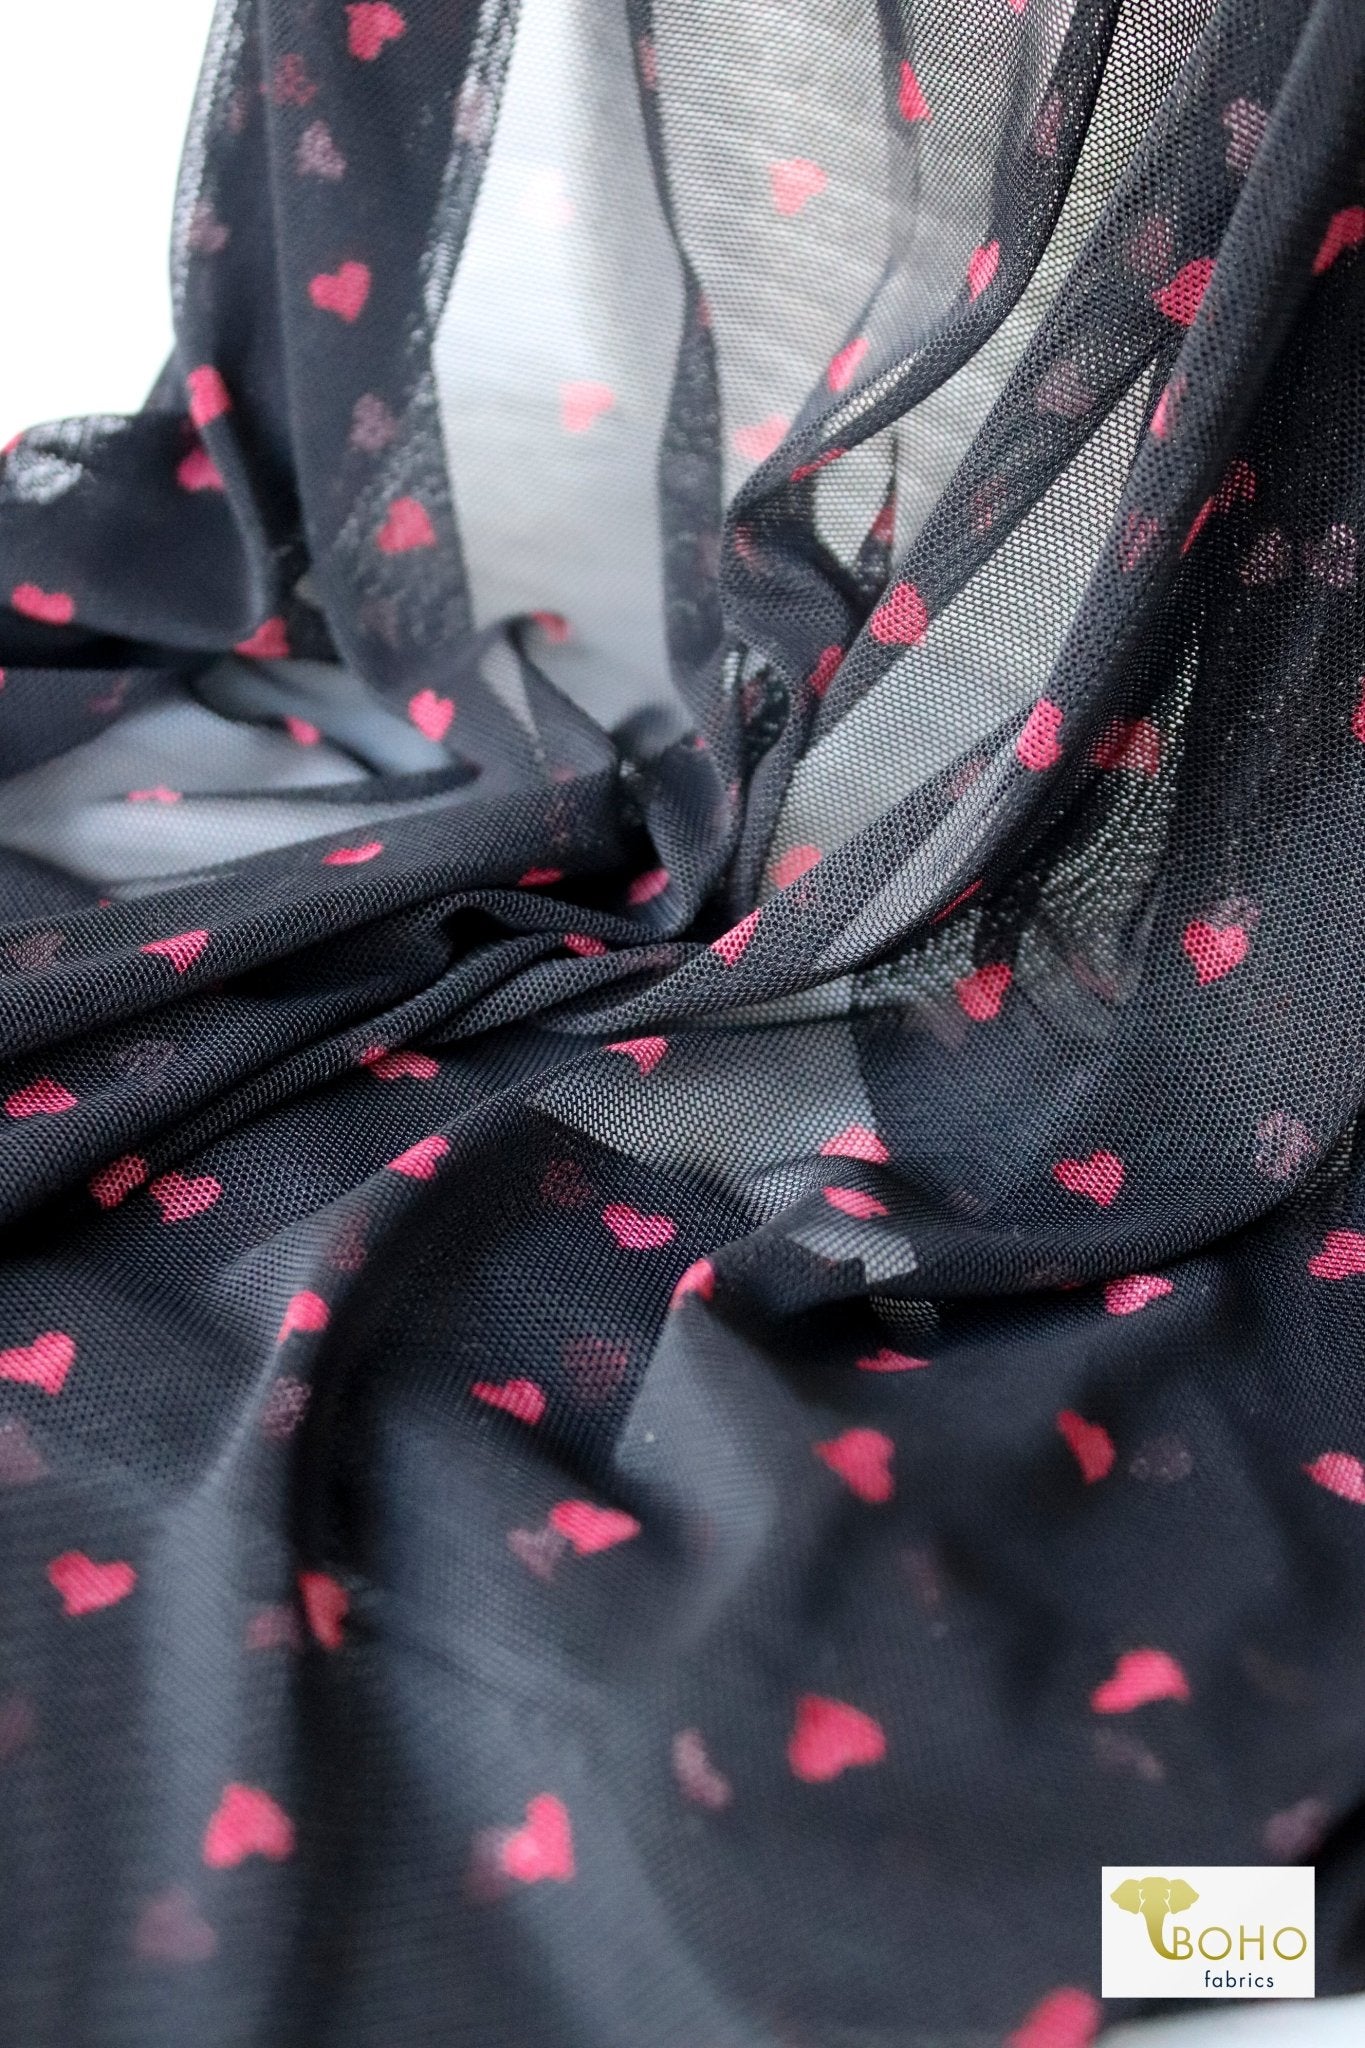 Red Hearts, Stretch Mesh Printed Fabric. - Boho Fabrics